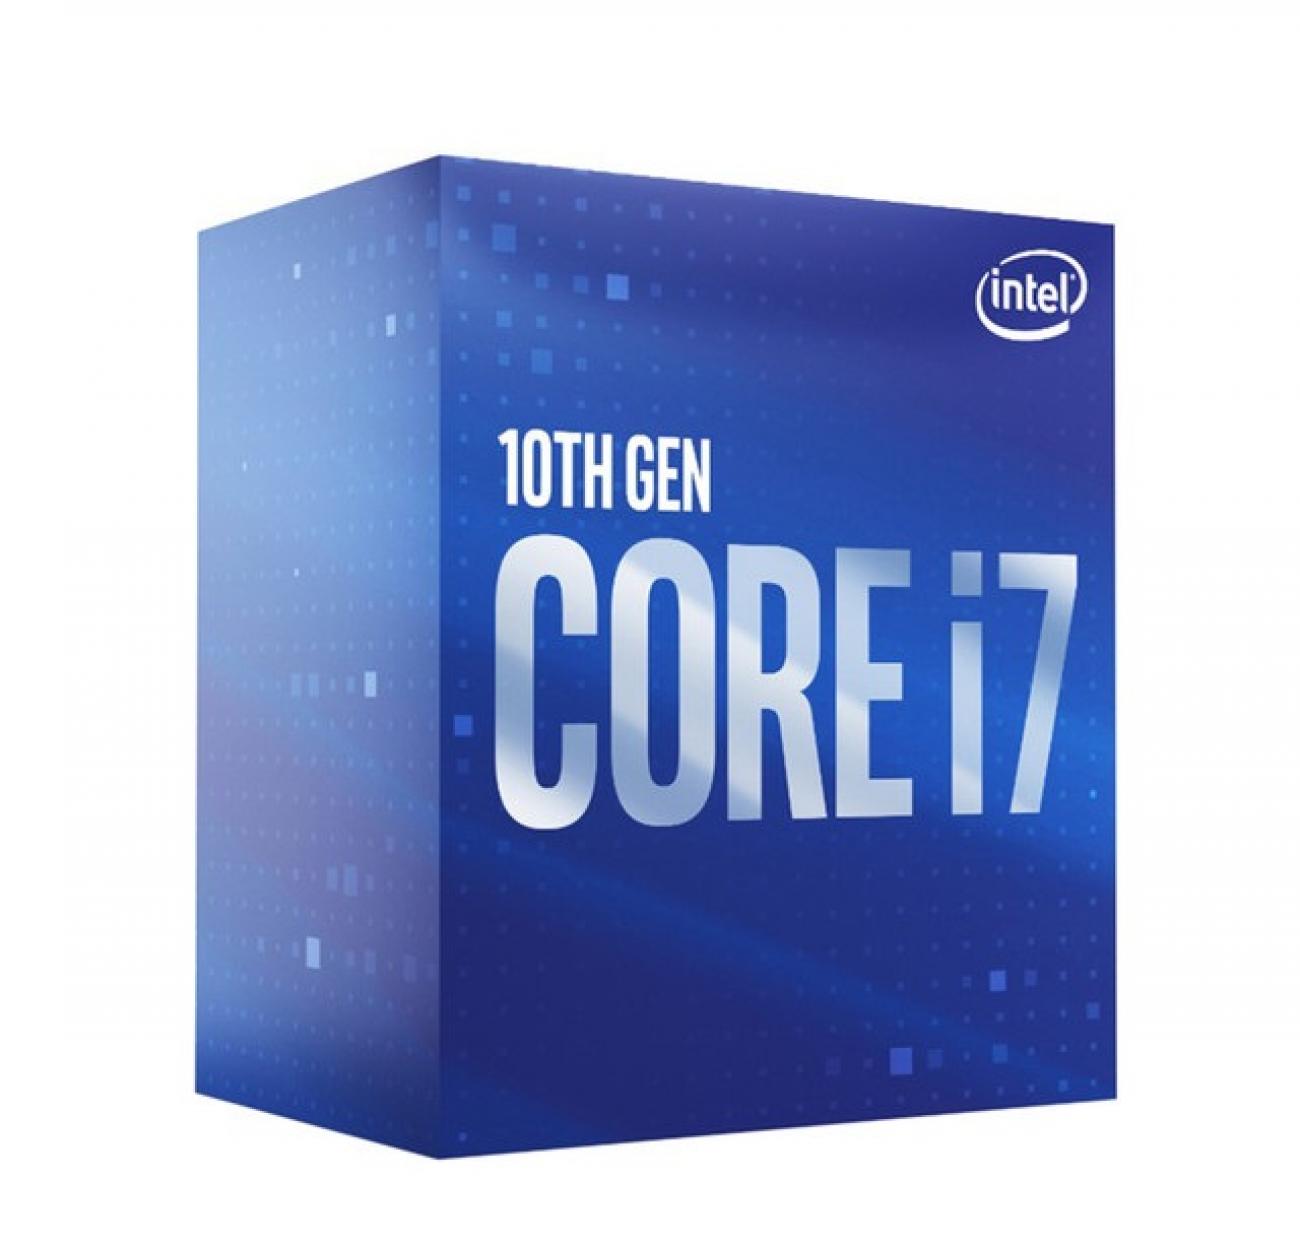 INTEL CPU 10TH GEN, I7-10700K, LGA1200, 3.80GHz 16MB CACHE BOX, COMET LAKE , NO FAN, GRAPHICS